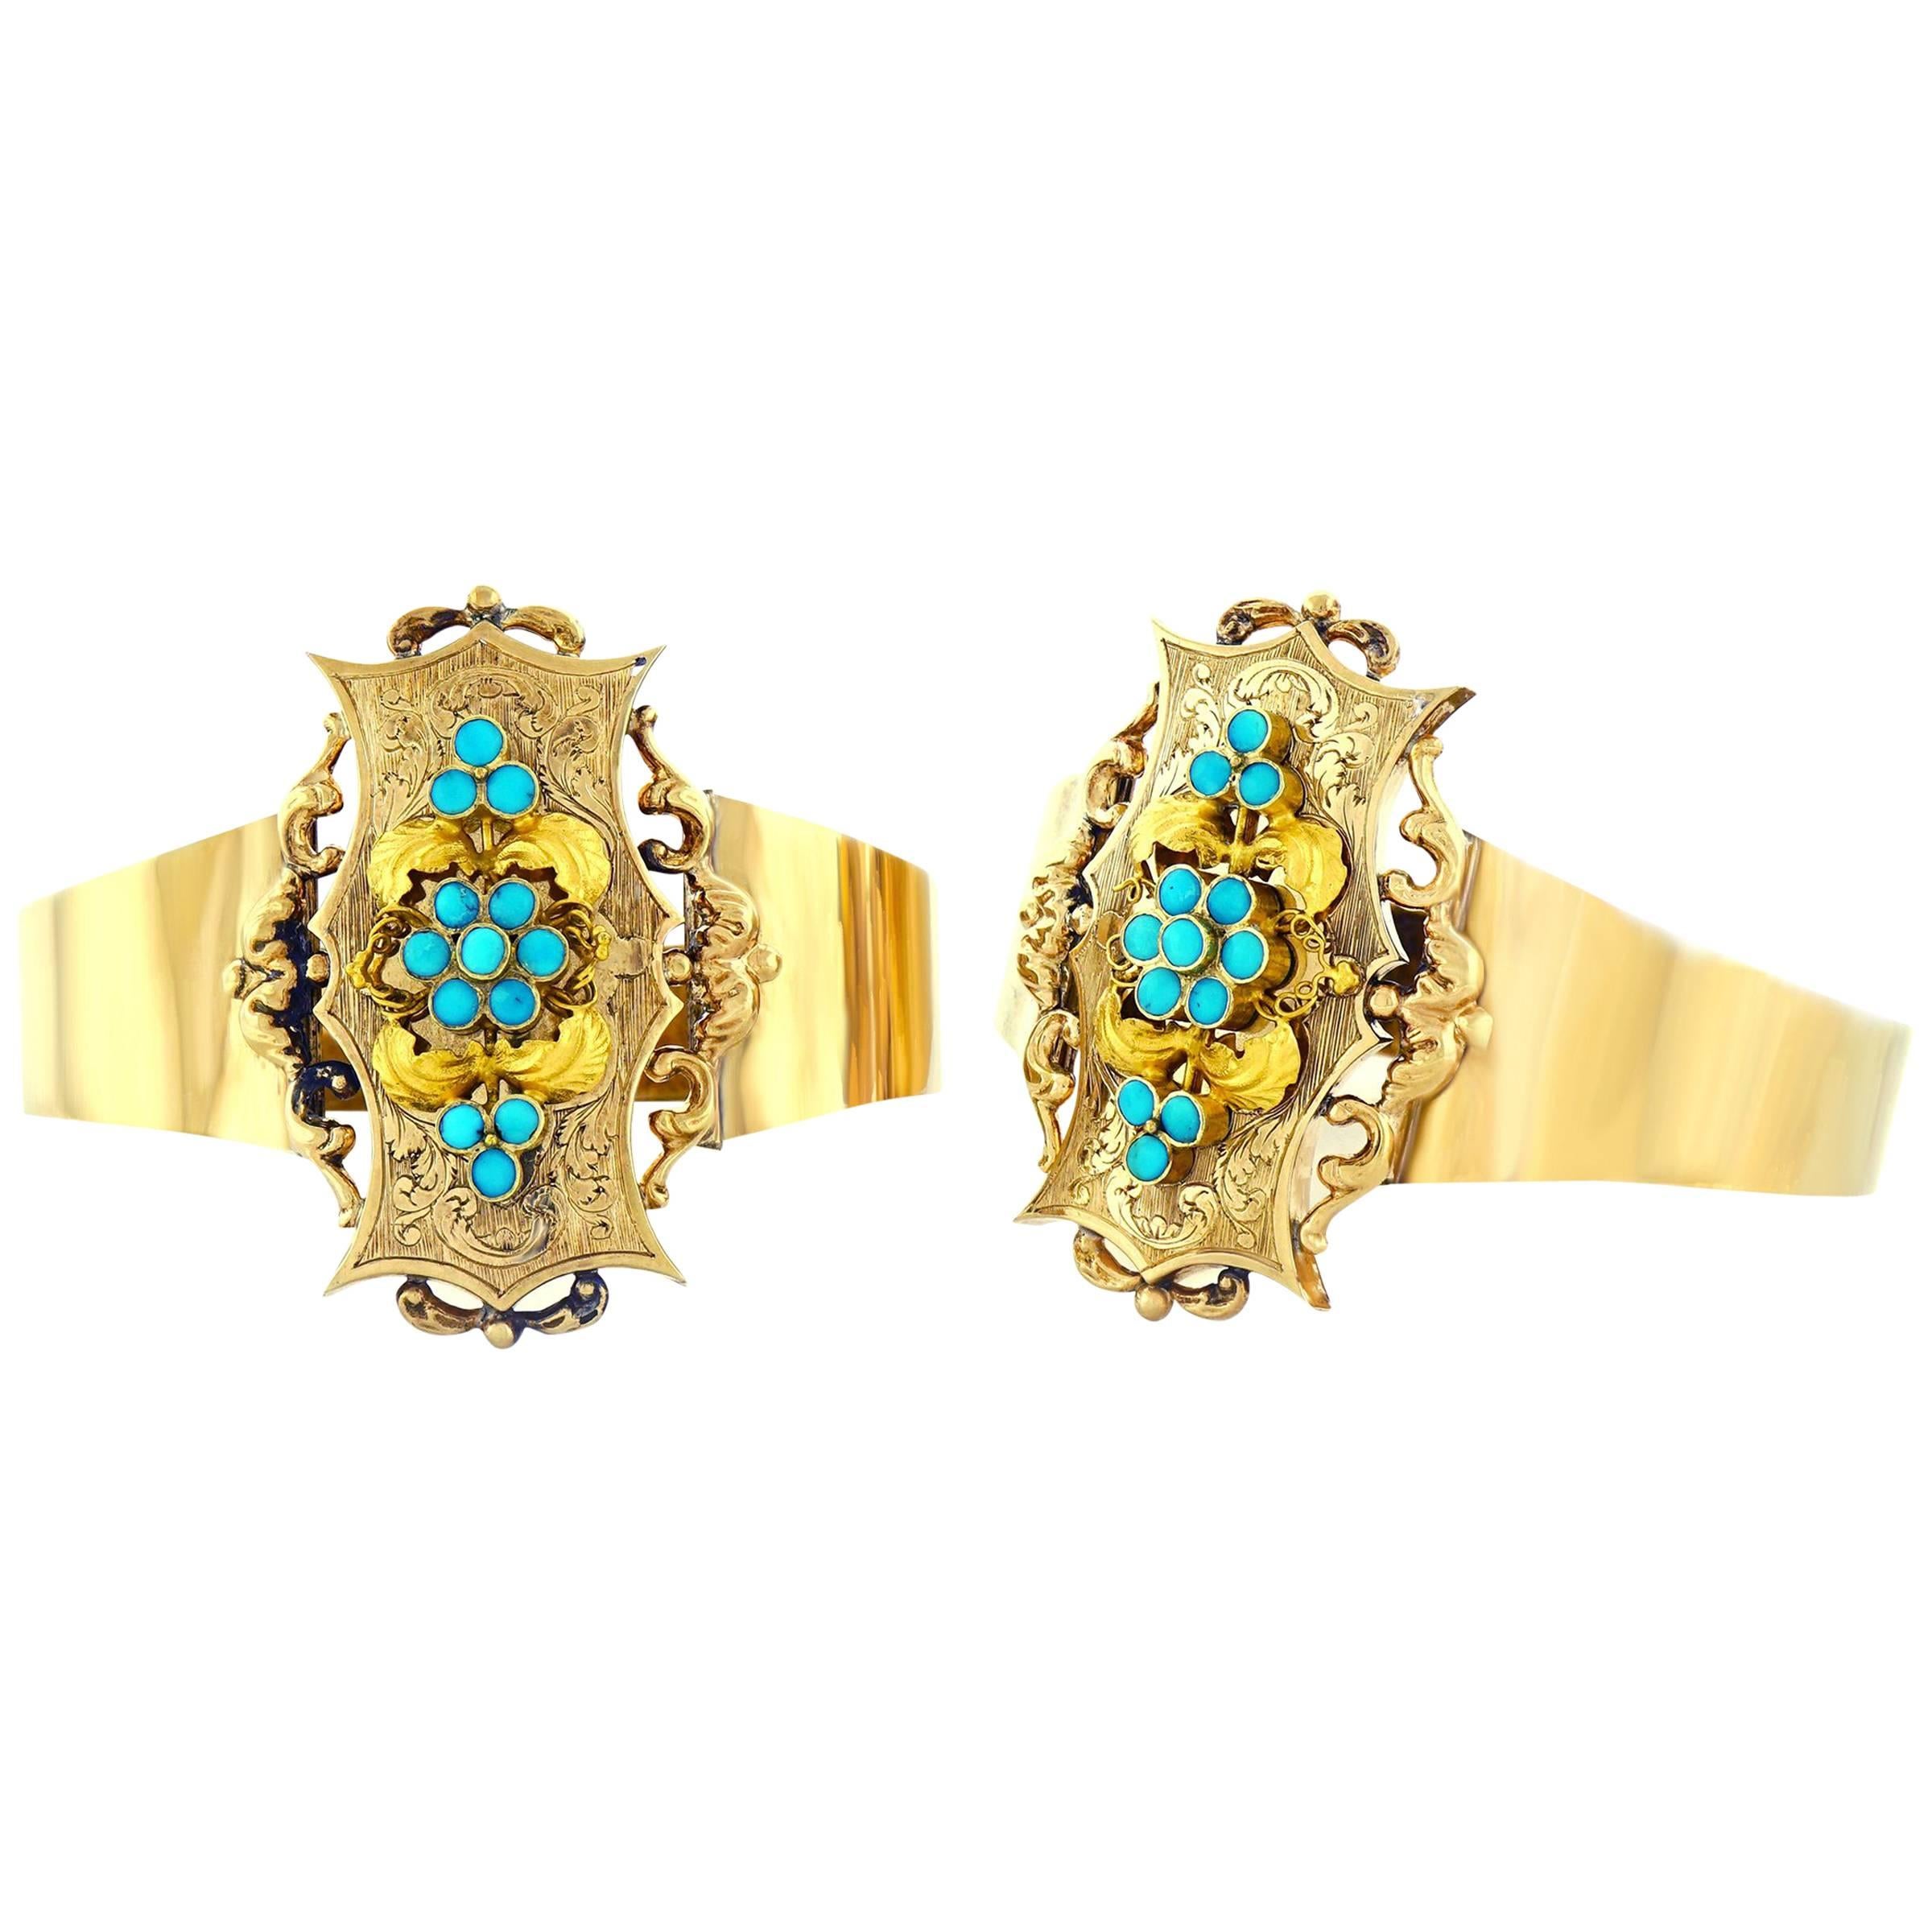 Pair of Antique Turquoise-Set Gold Bracelets